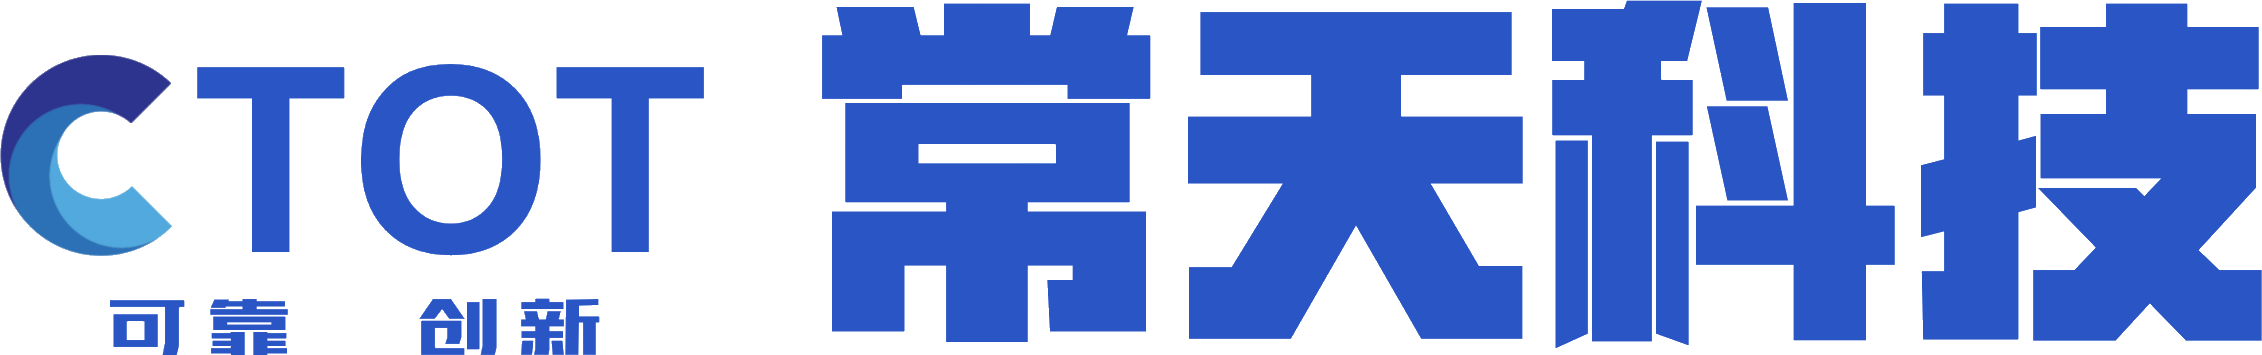 天禄logo透明.png